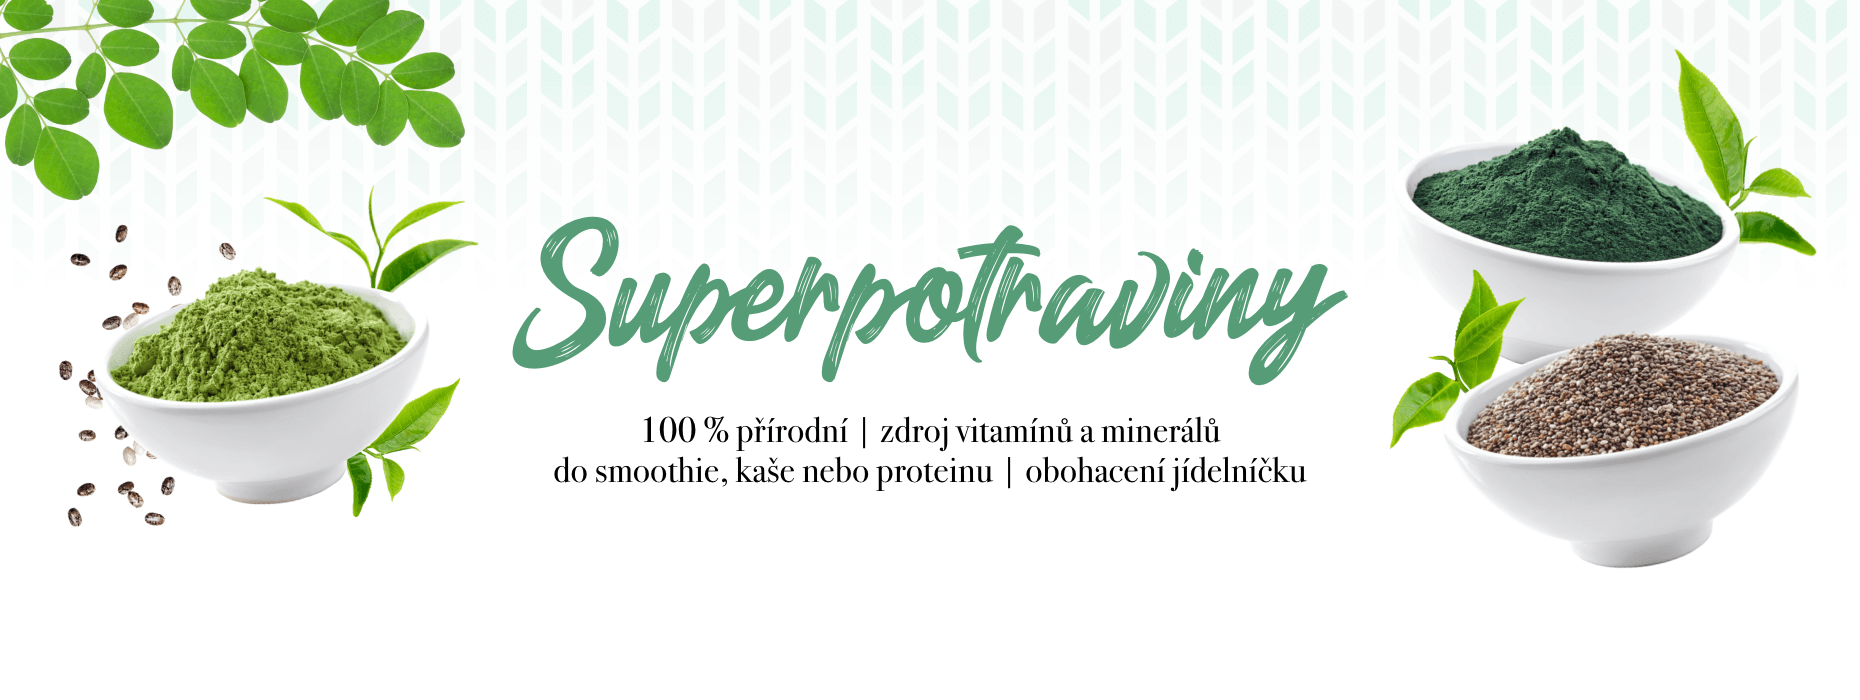 superpotraviny__1860x700_cz